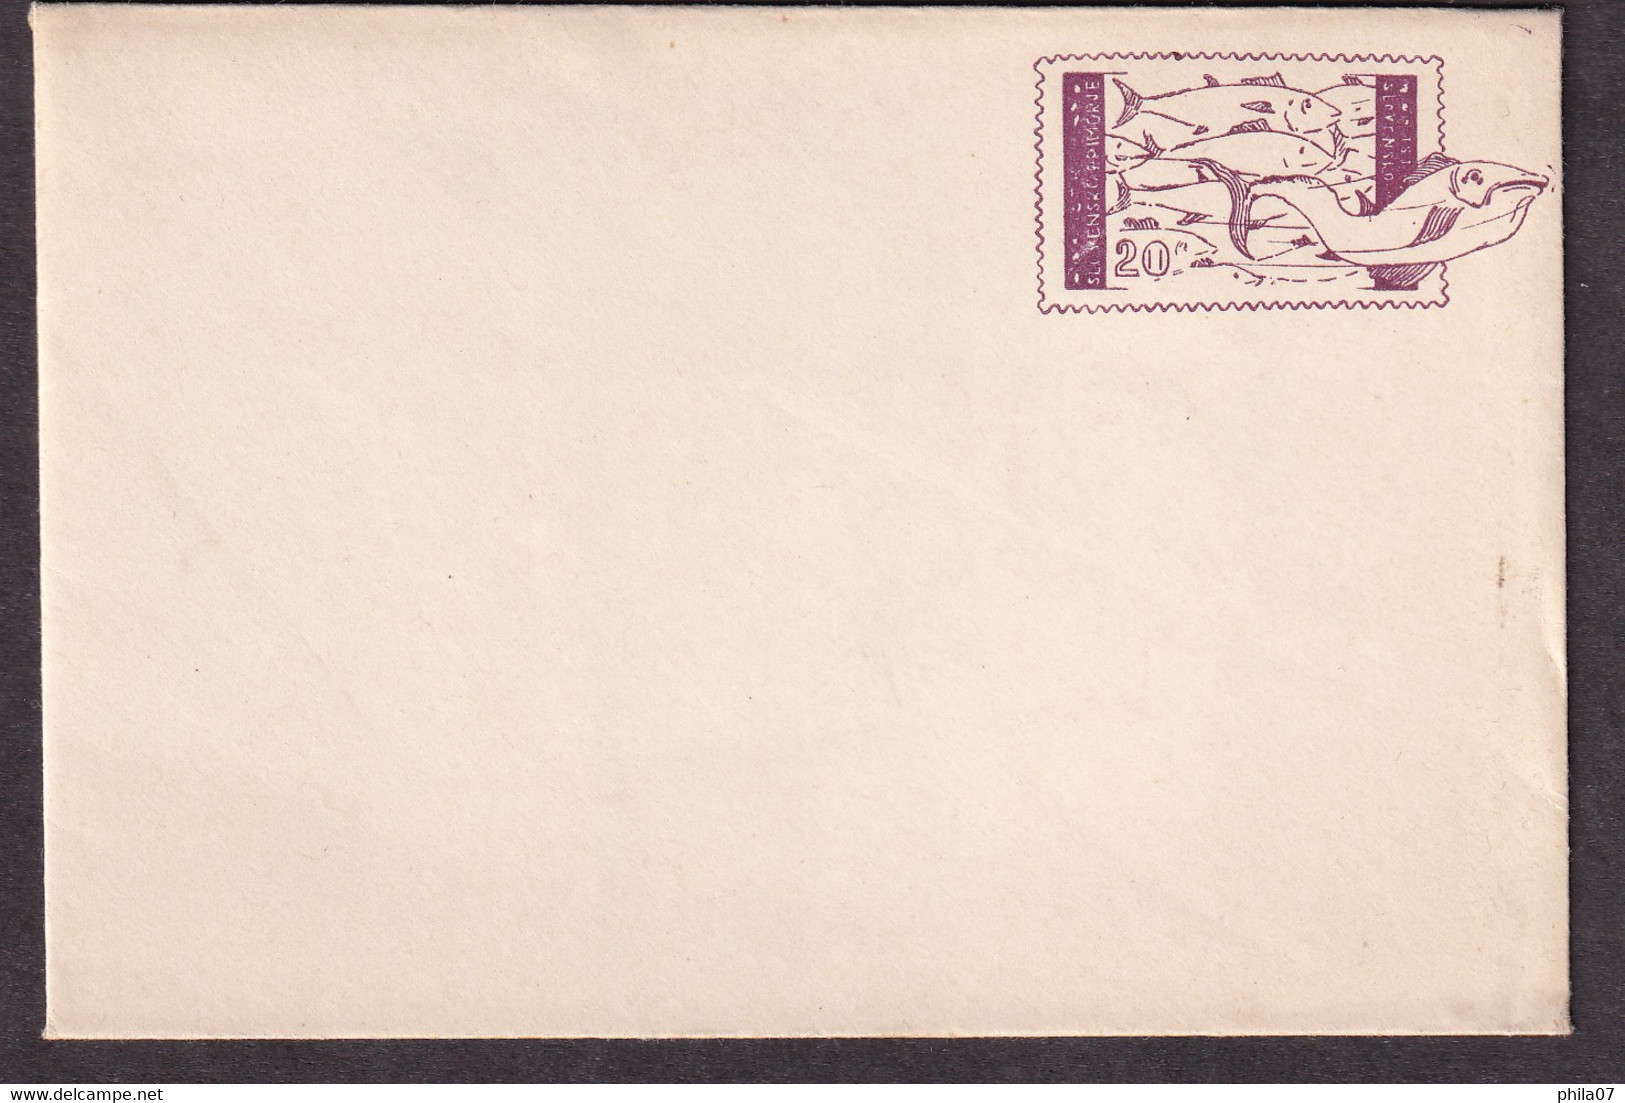 Philatelic Souvenir Of The Time. Print On Smaller Size Envelope And On Card Inside The Envelope. / 4 Scans - Yugoslavian Occ.: Slovenian Shore